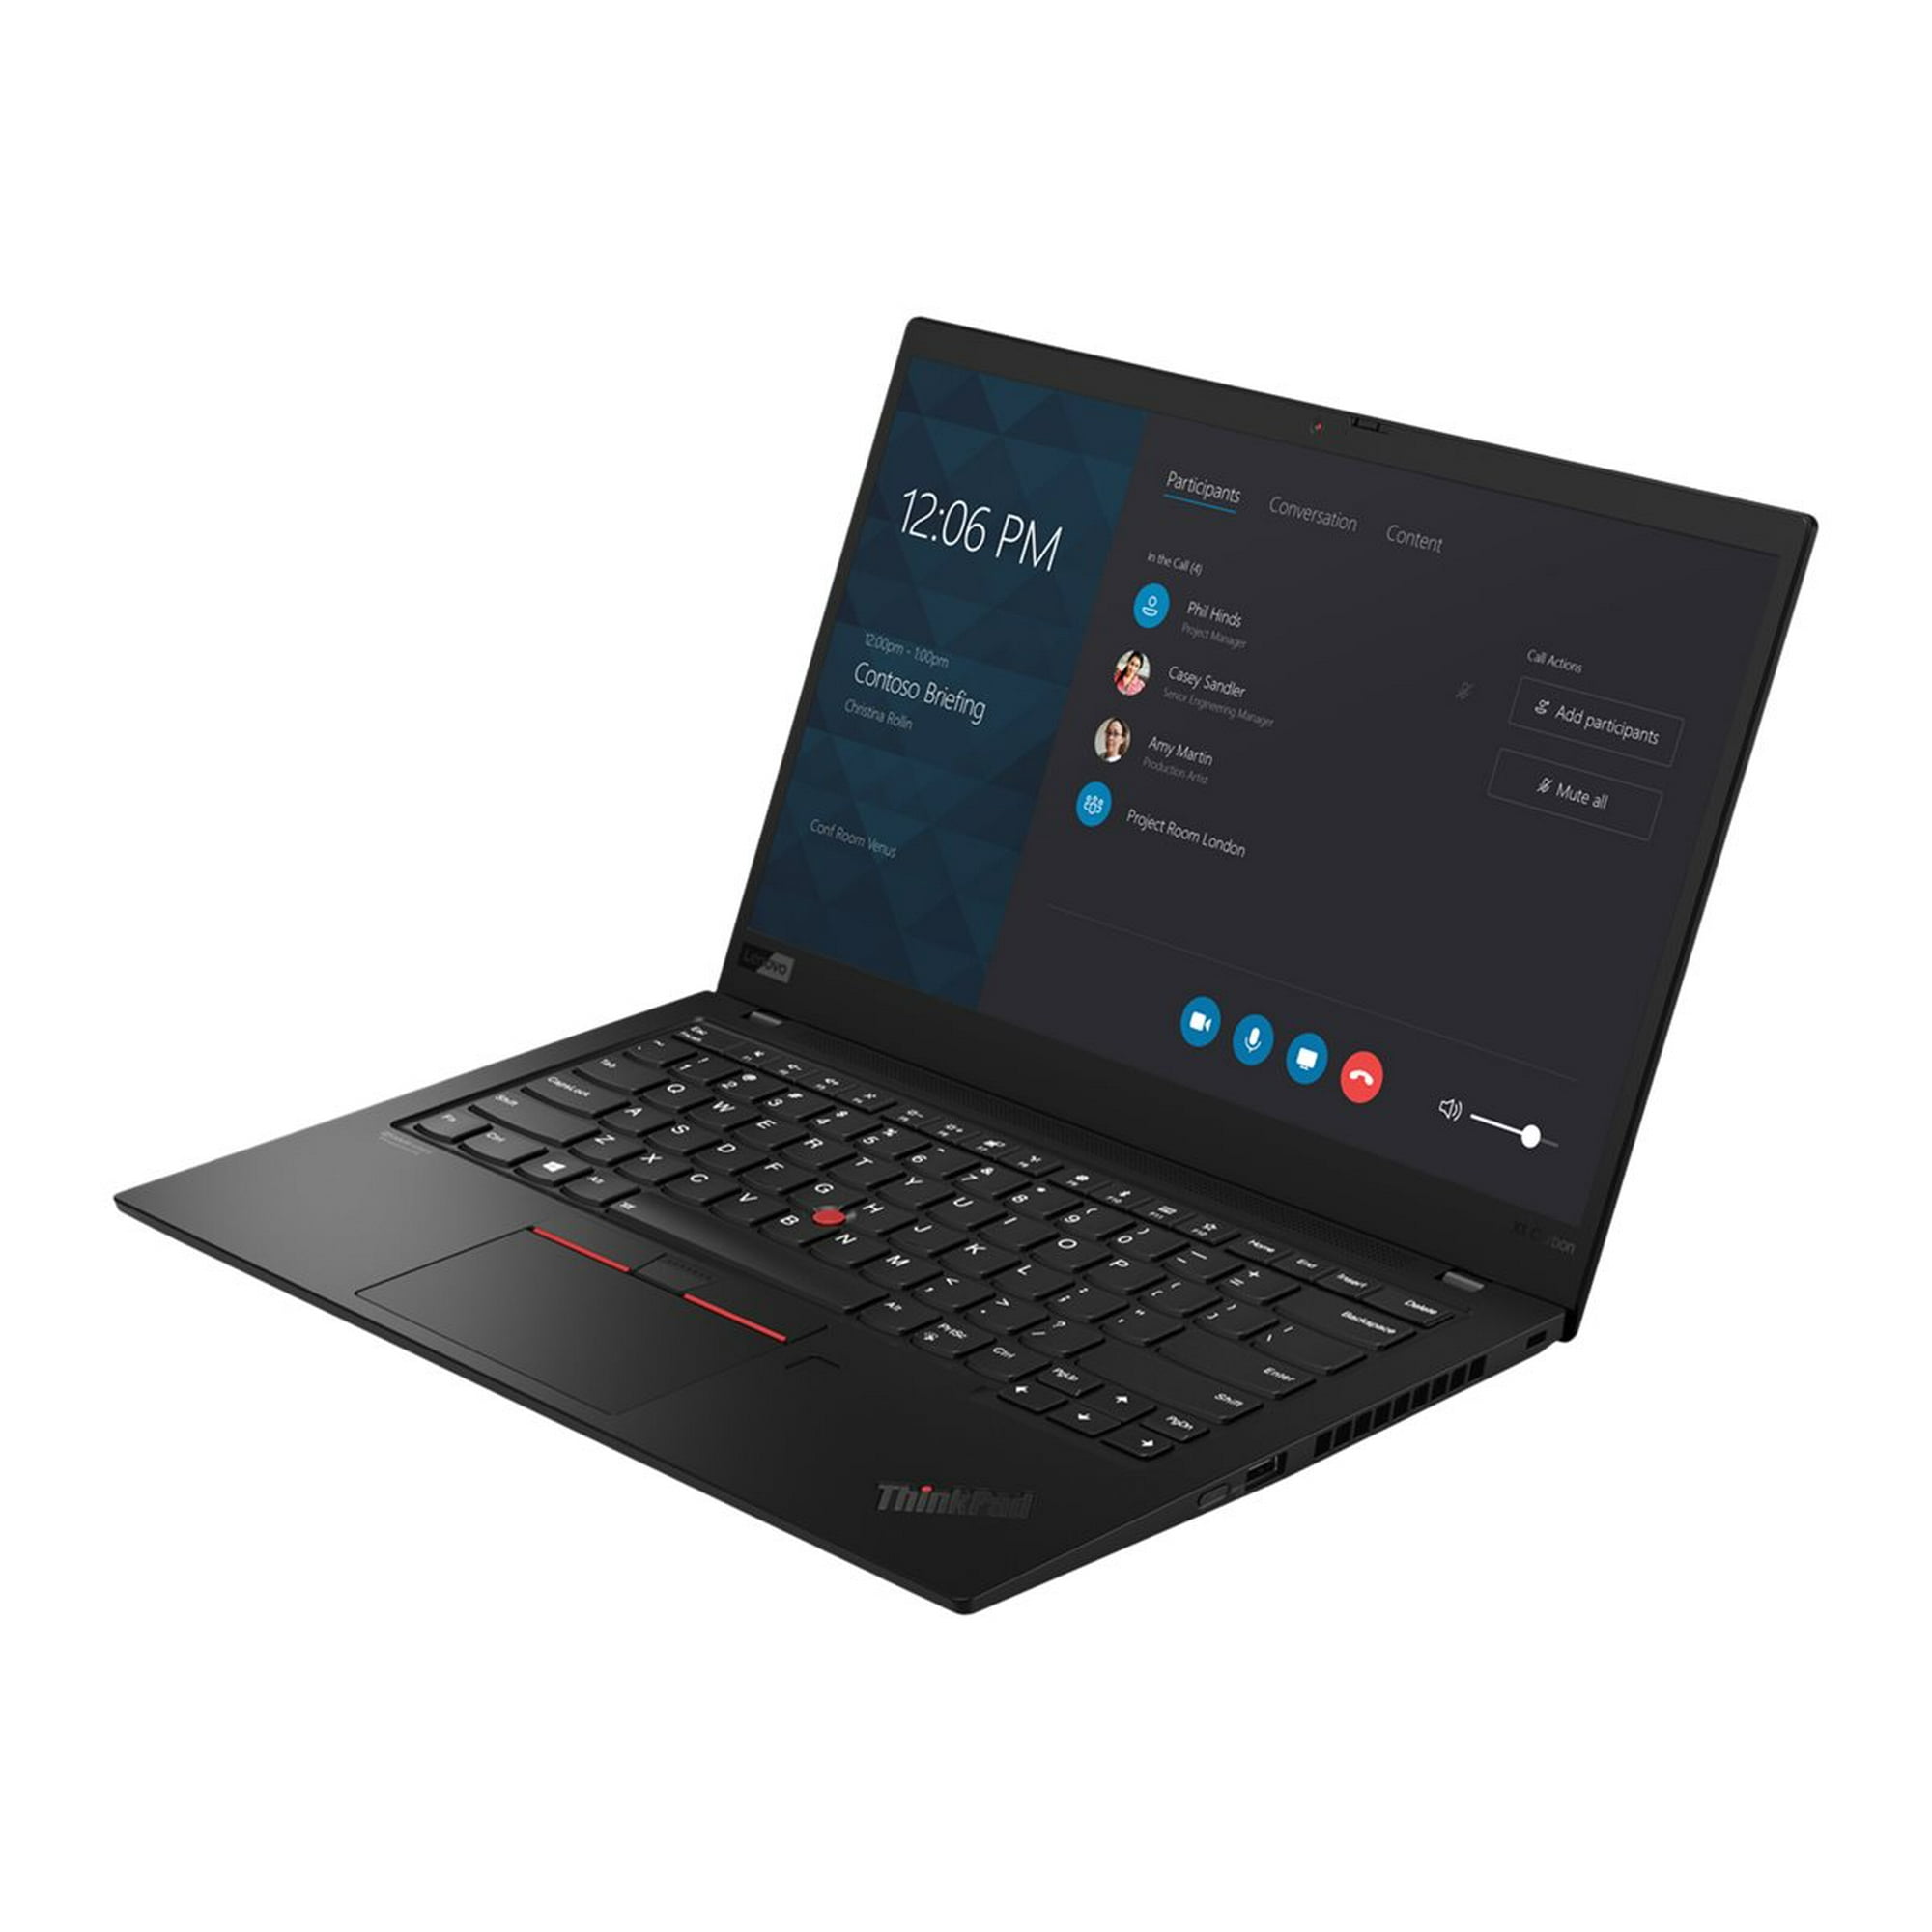 Lenovo ThinkPad X1 Carbon (7th Gen) 20R1 - Ultrabook - Intel Core